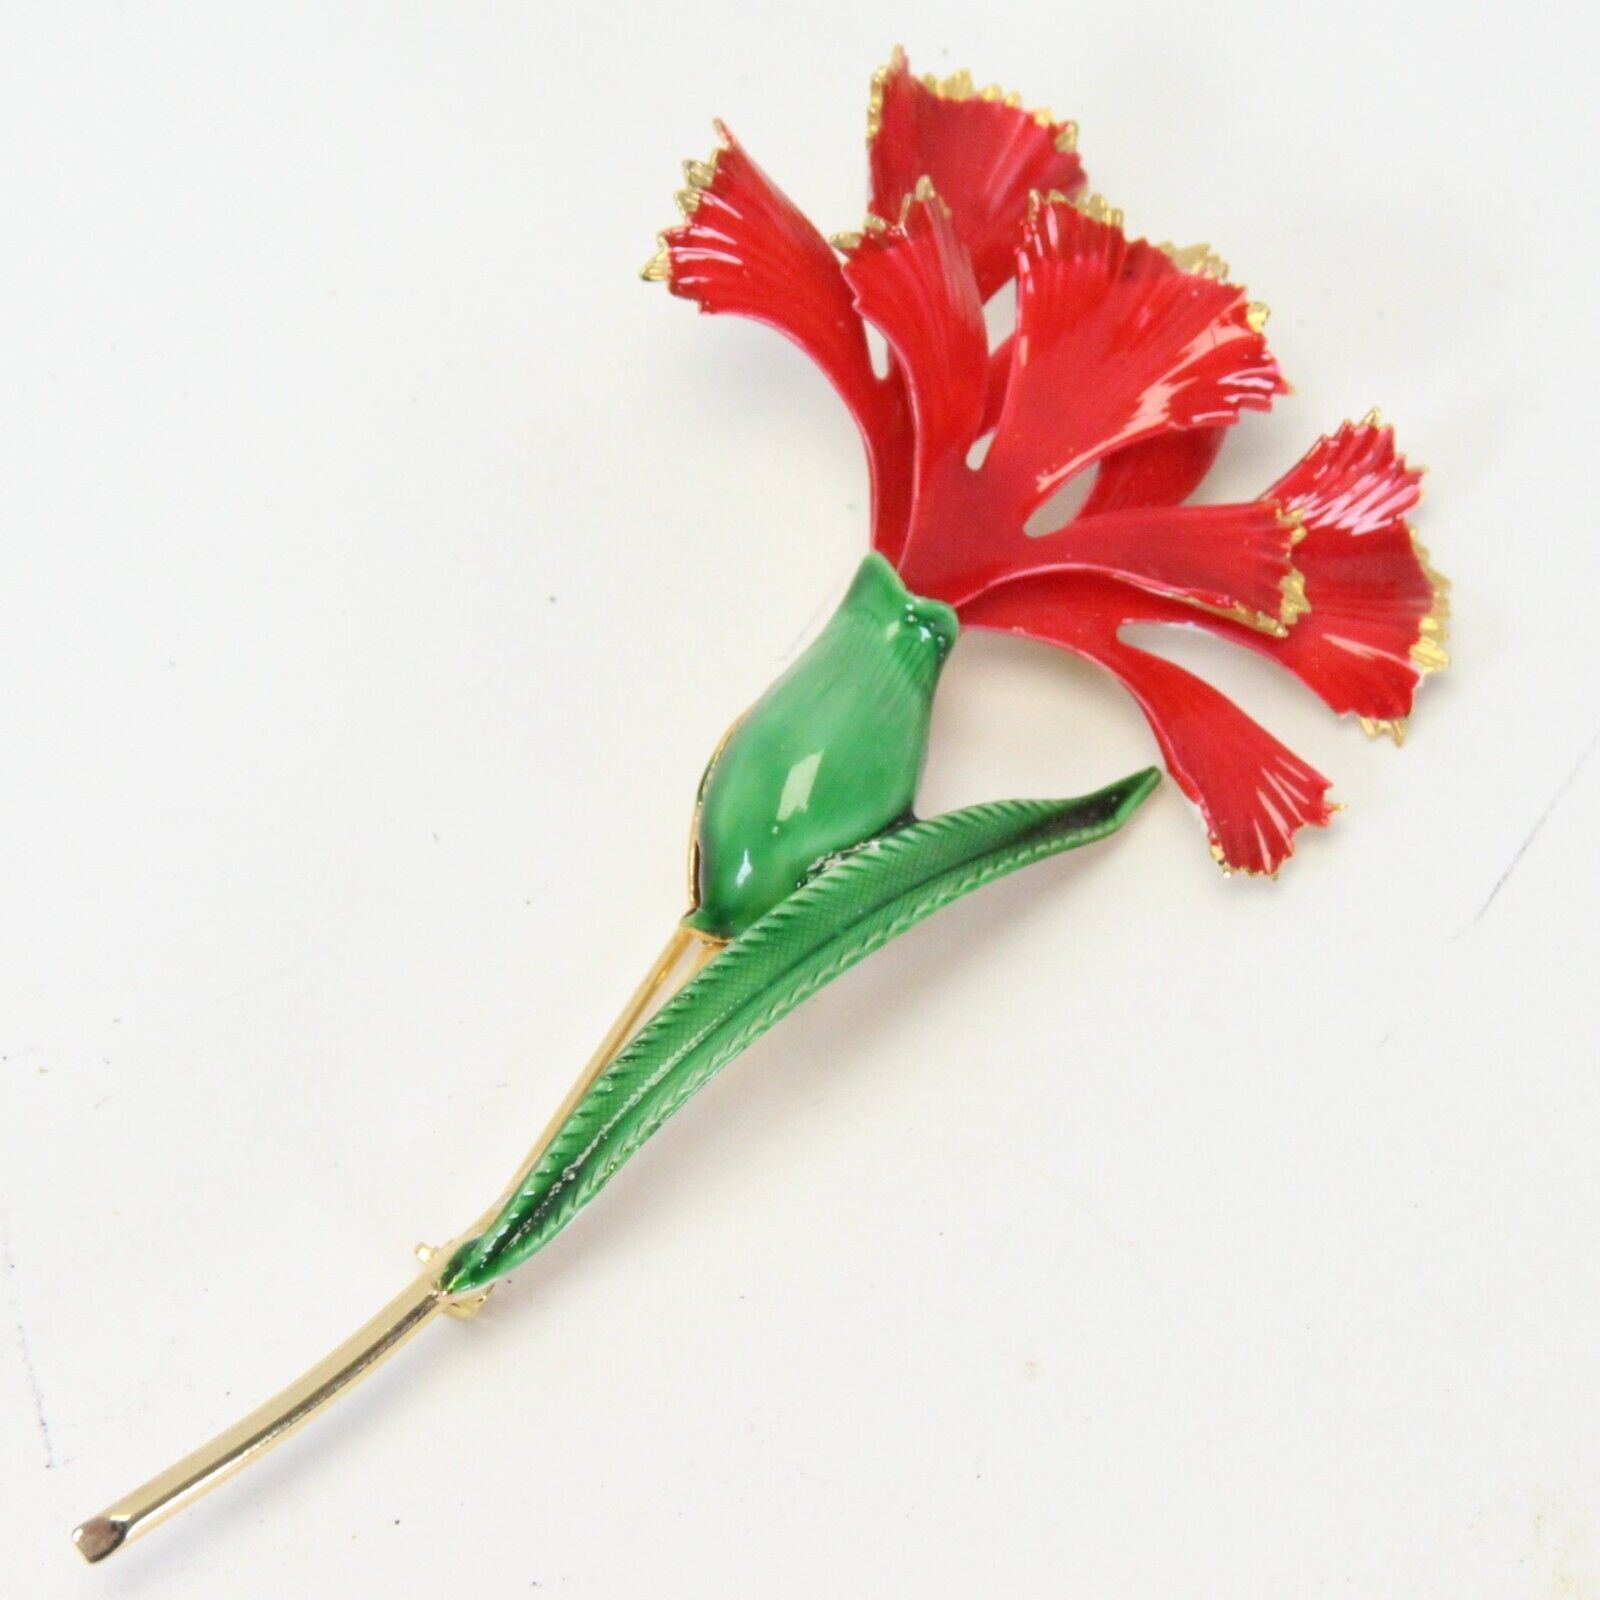 Red Enamel Flower Pin Brooch Fashion Jewelry Gold Tone Edge Green Steam - £15.65 GBP